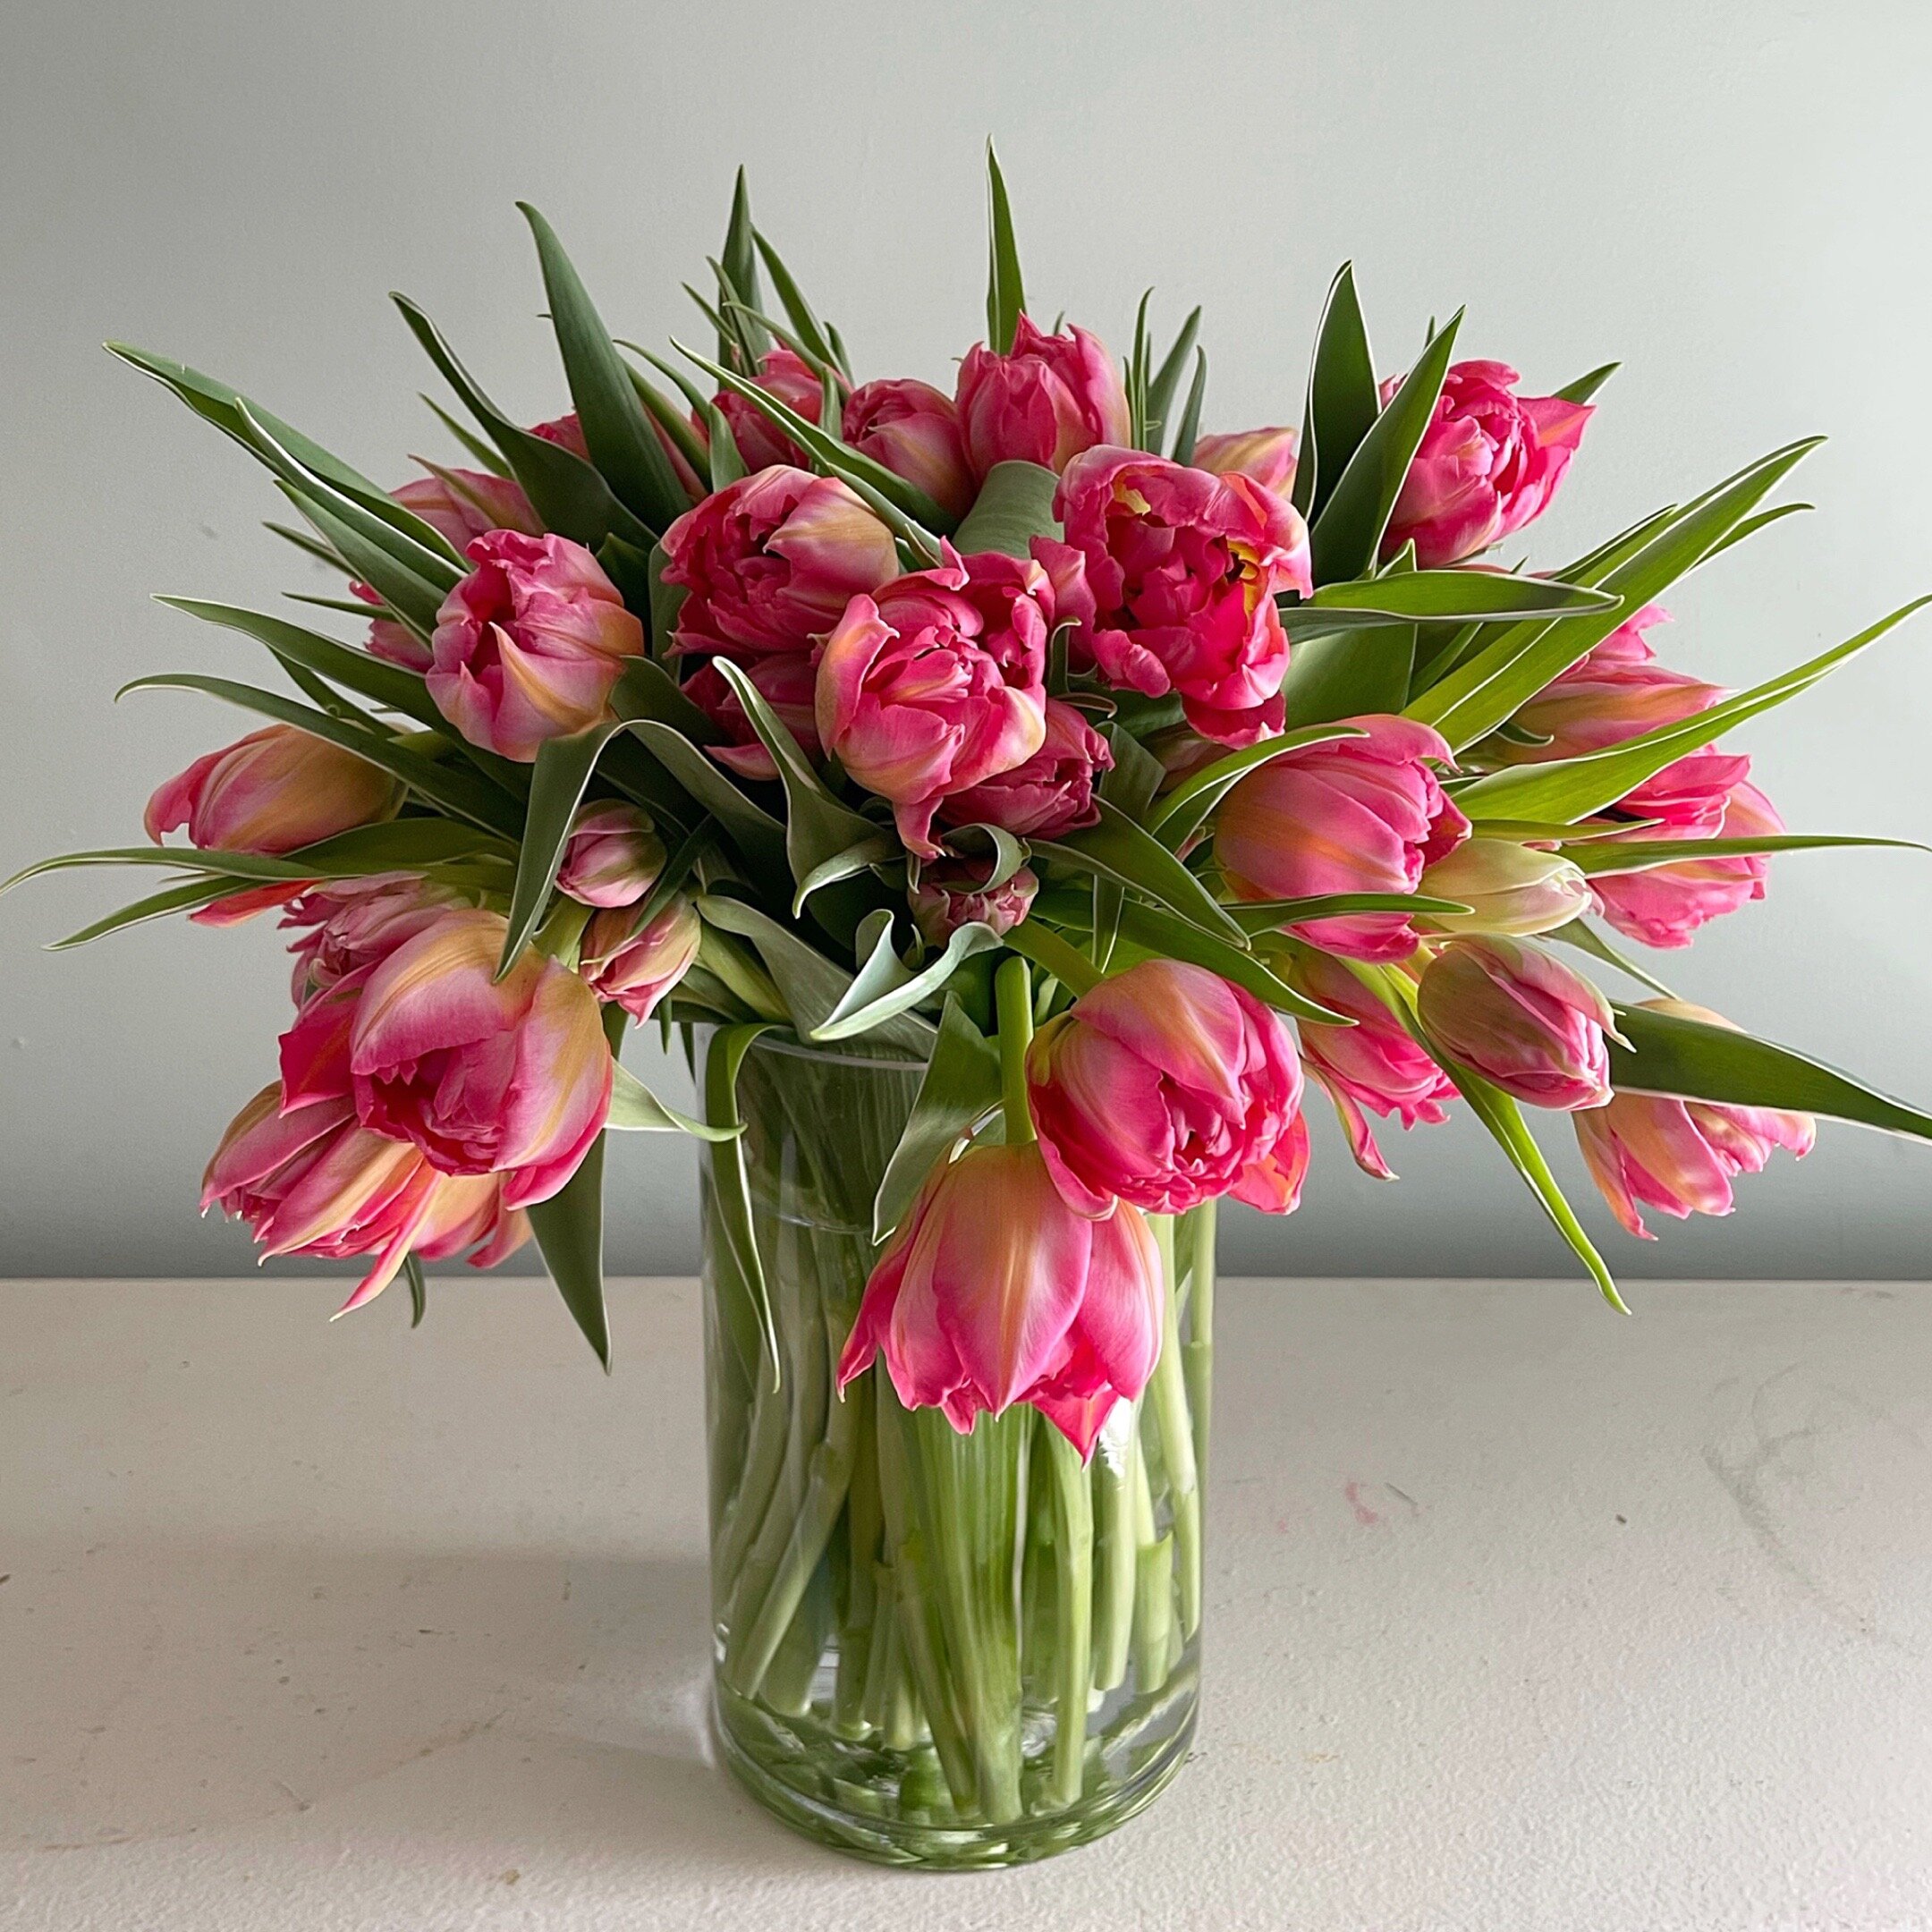 Impressive Tulips - Atelier Ashley